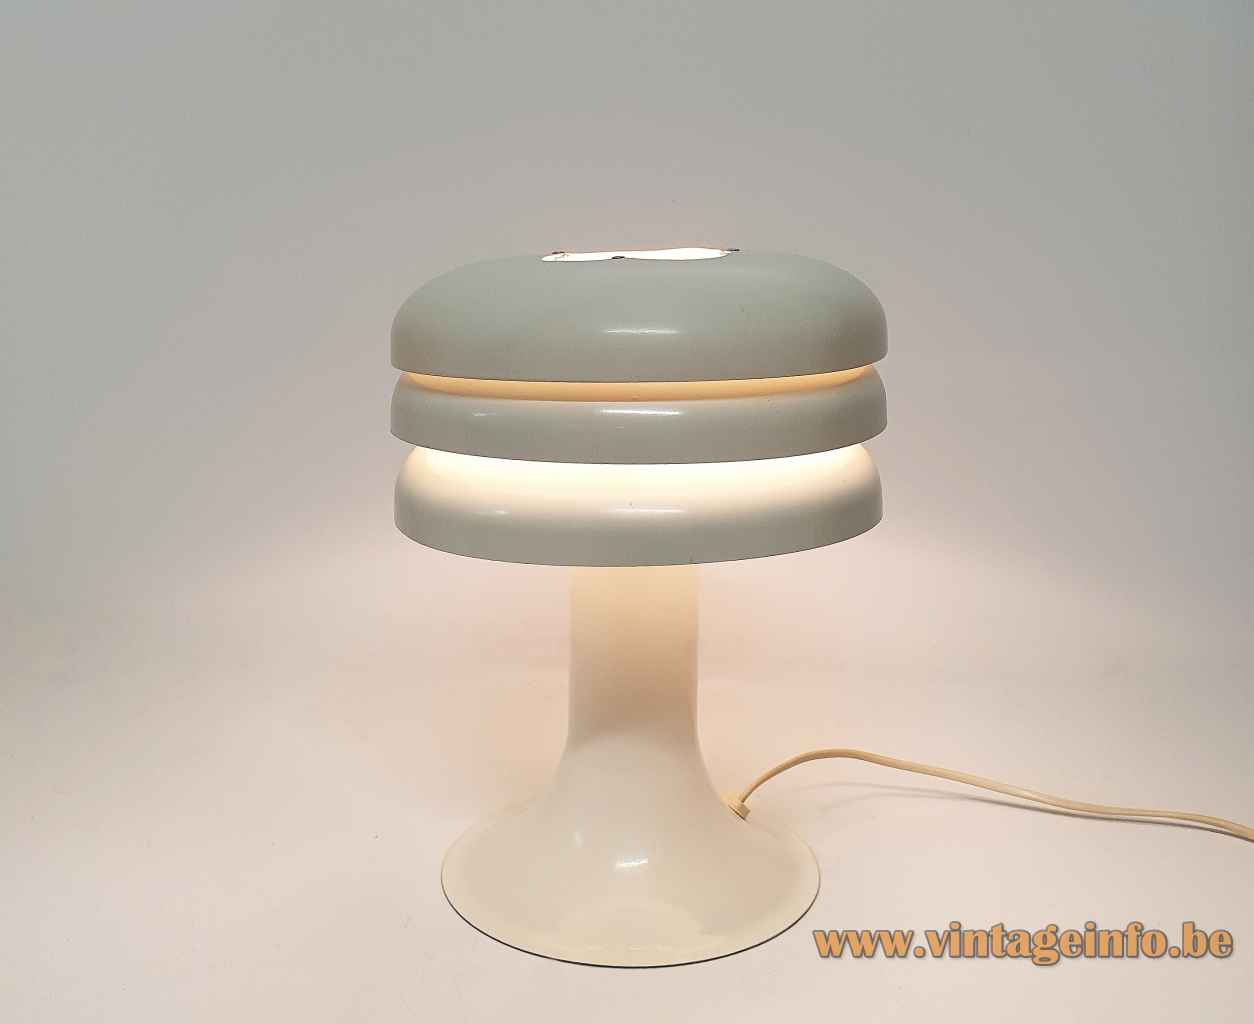 White Lamingo BN 25 table lamp design: Hans-Agne Jakobsson aluminium base 3 stacked rings lampshade 1960s 